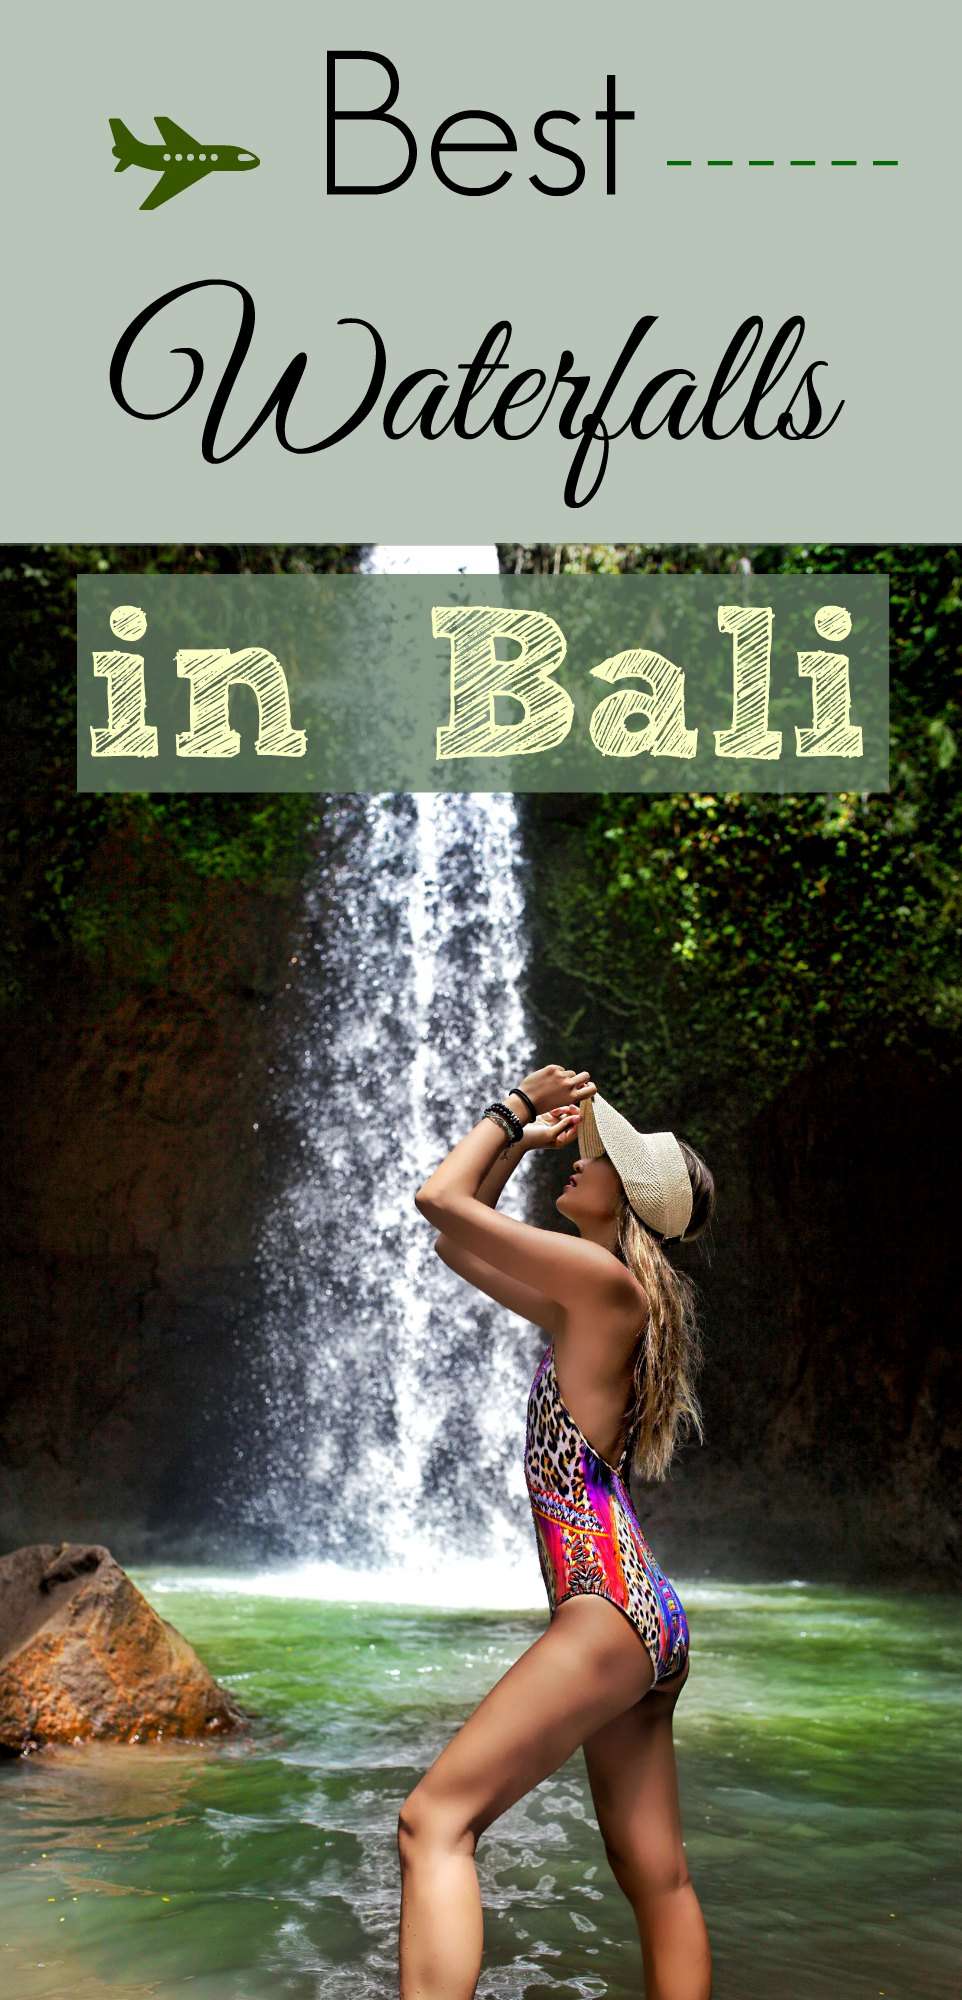 Tibumana Waterfall - Best Waterfalls in Bali